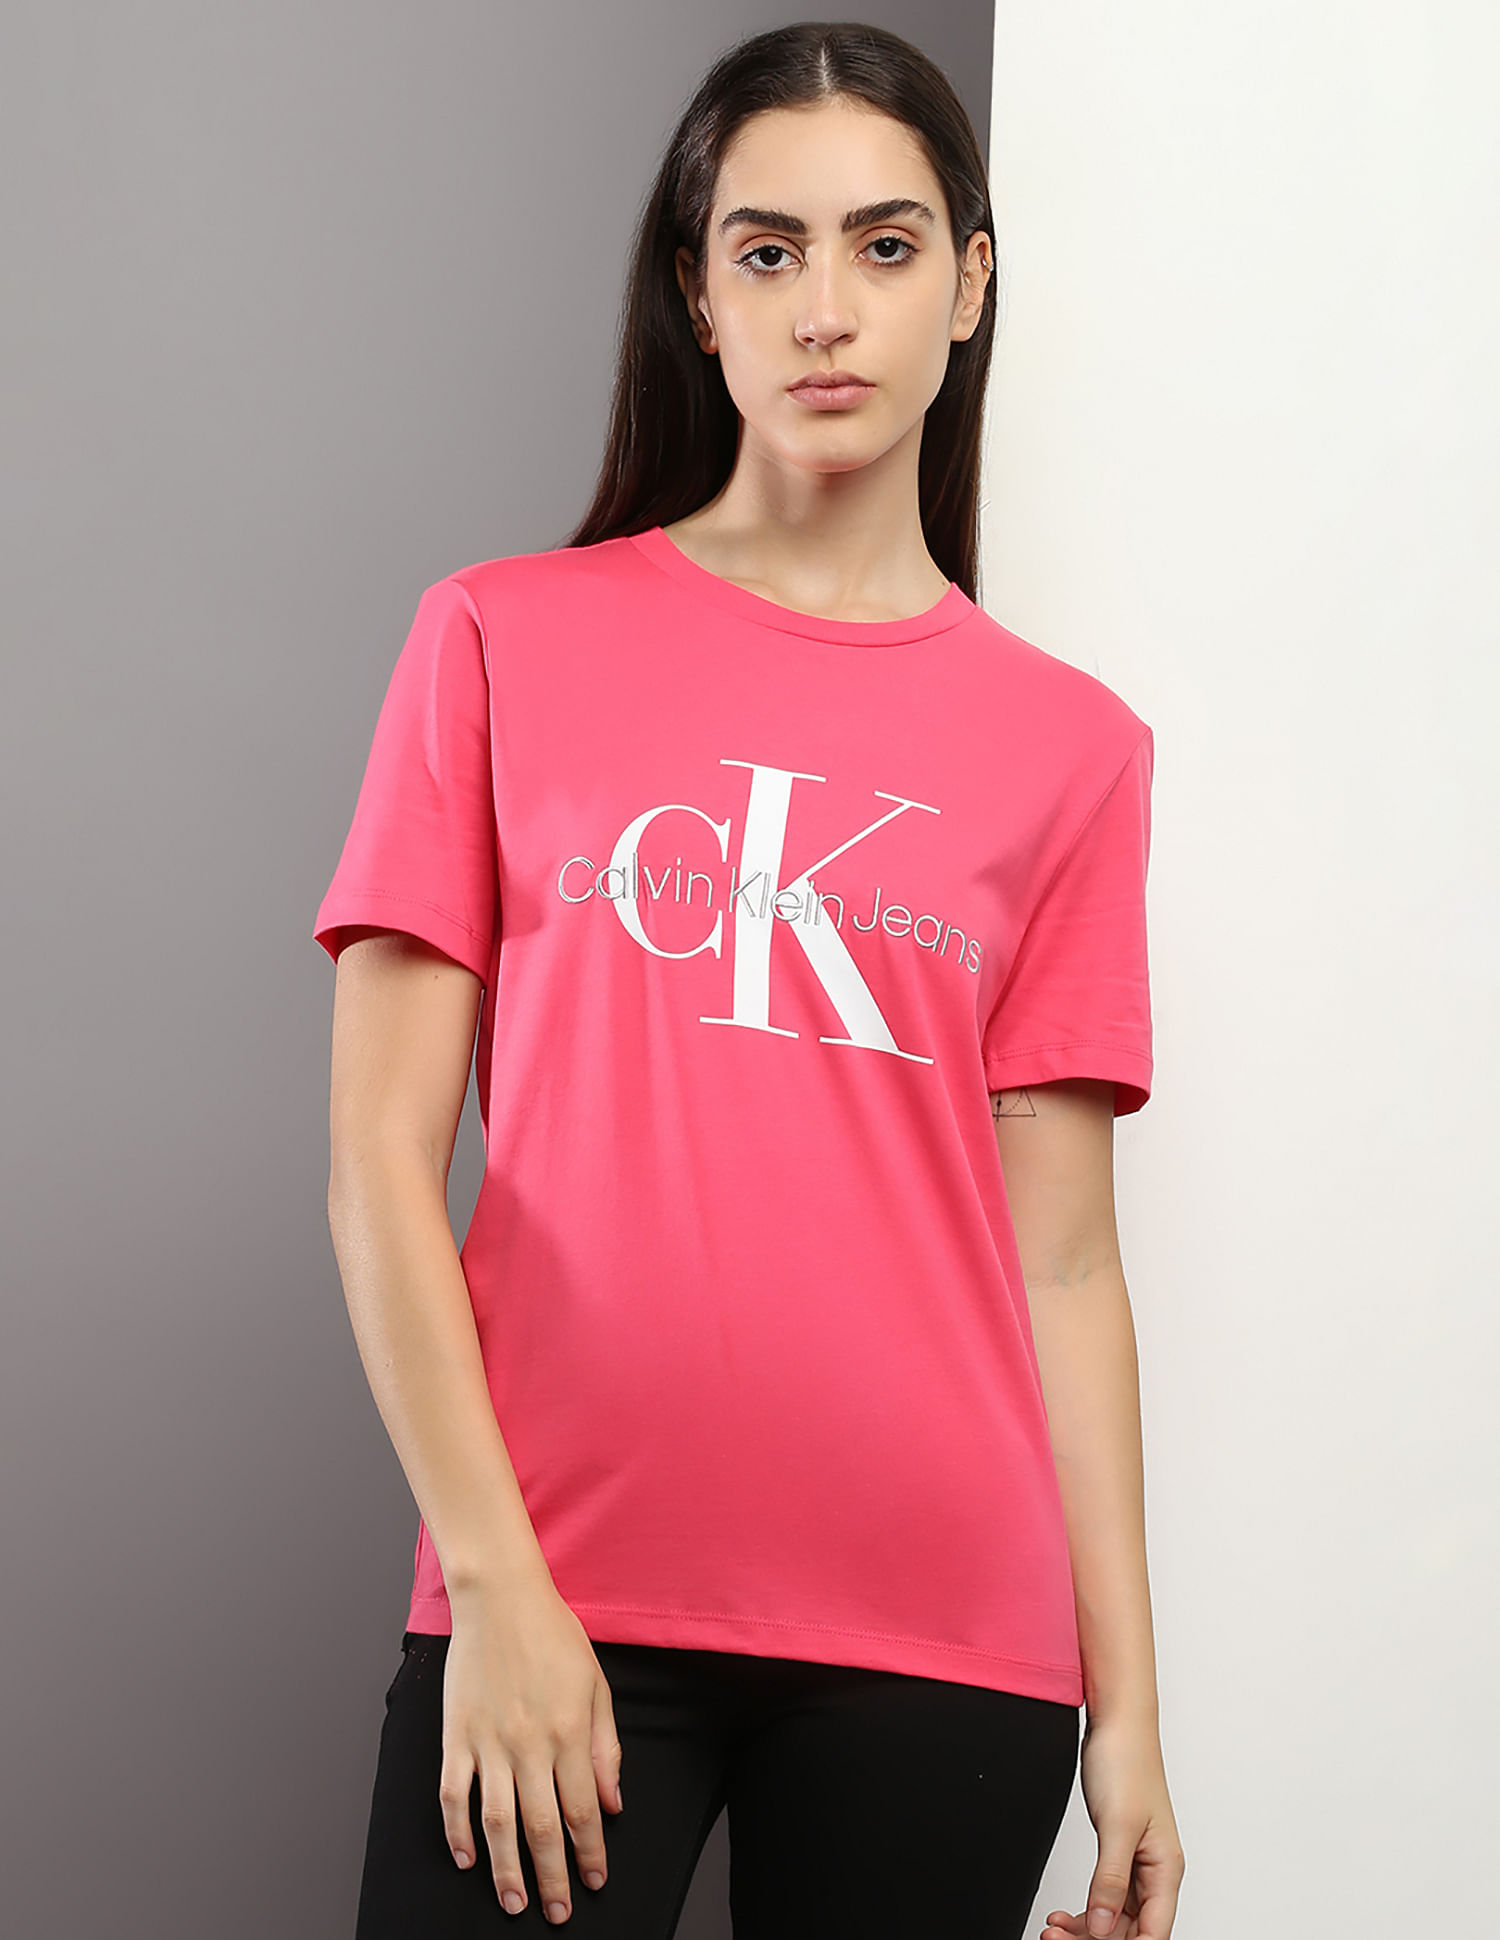 Buy Calvin Klein Jeans Monogram Logo T-shirt - NNNOW.com